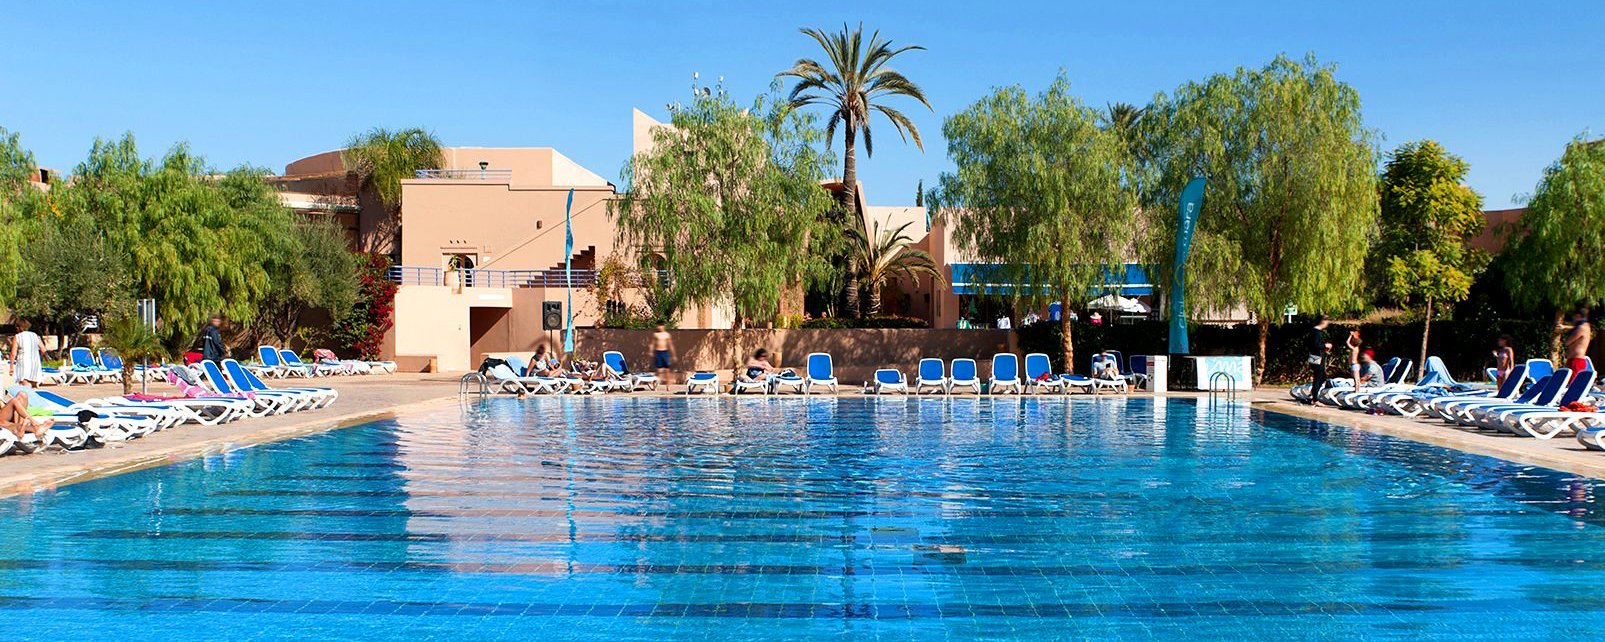 Hotel Club Marmara Madina in Marrakech